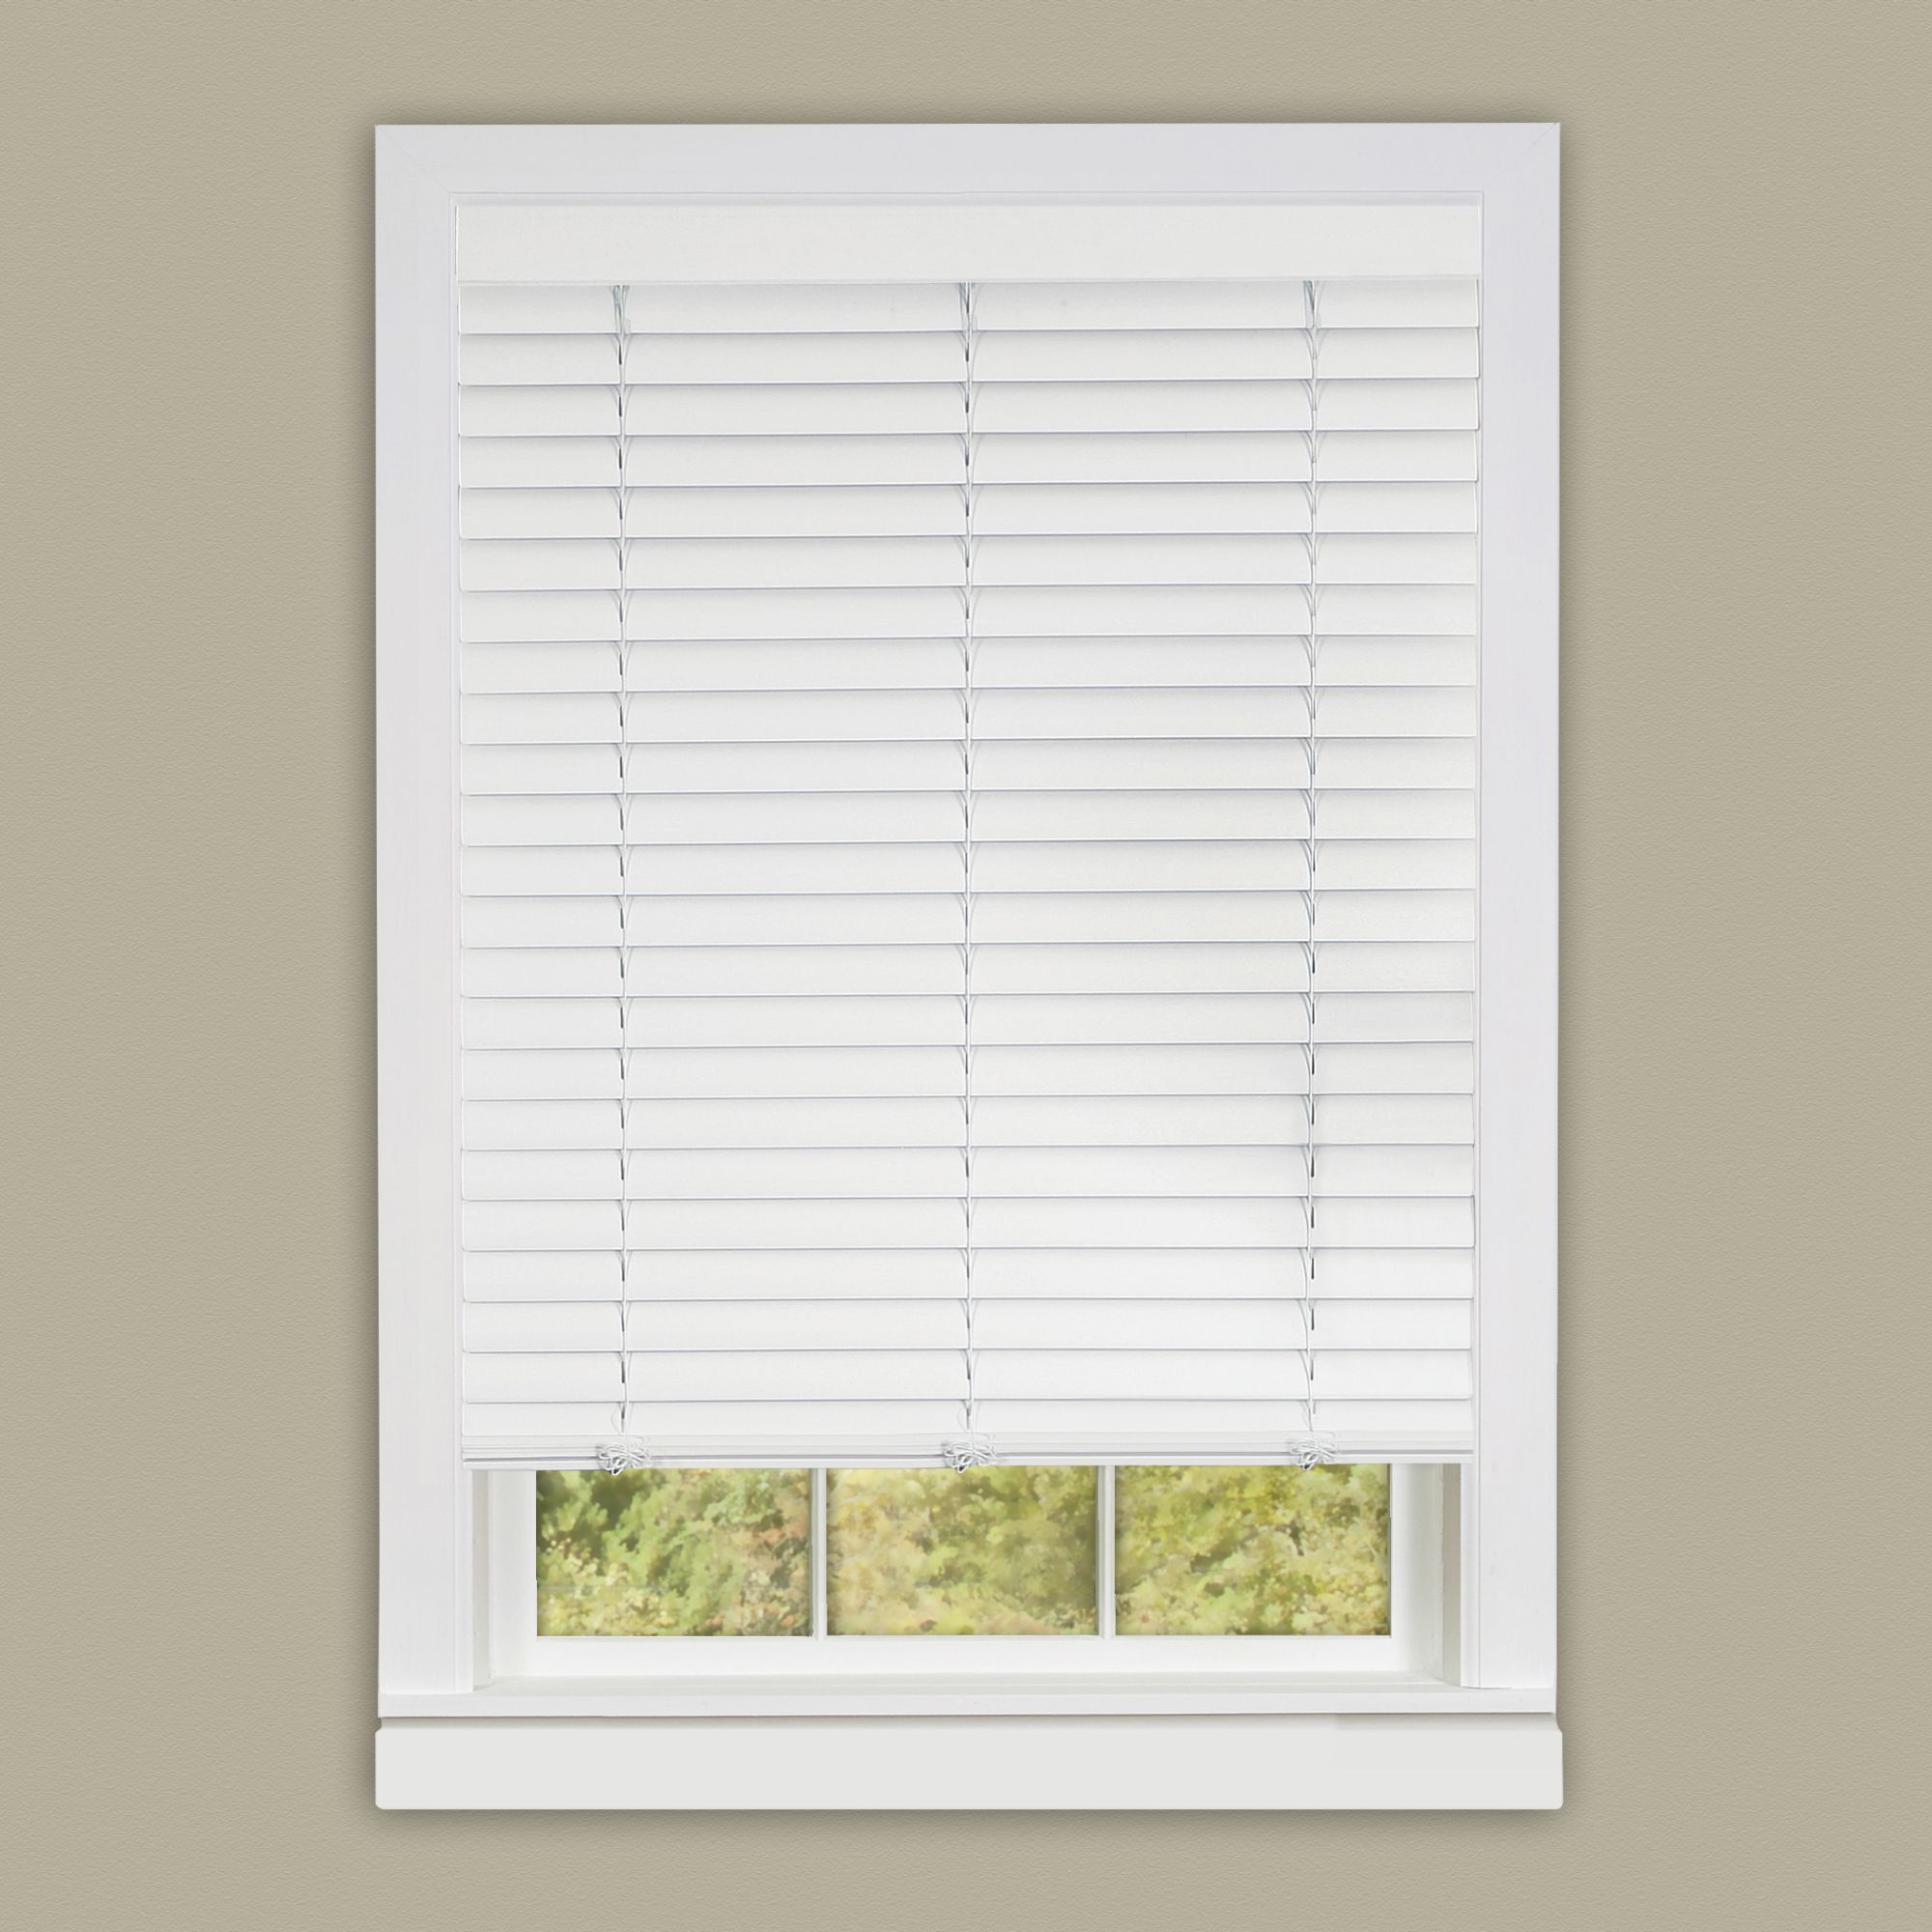 PowerSellerUSA Cordless Window Blinds, 2" Slats Vinyl Mini Blind, Premium Embossed Woodgrain, Anti-UV Window Treatment